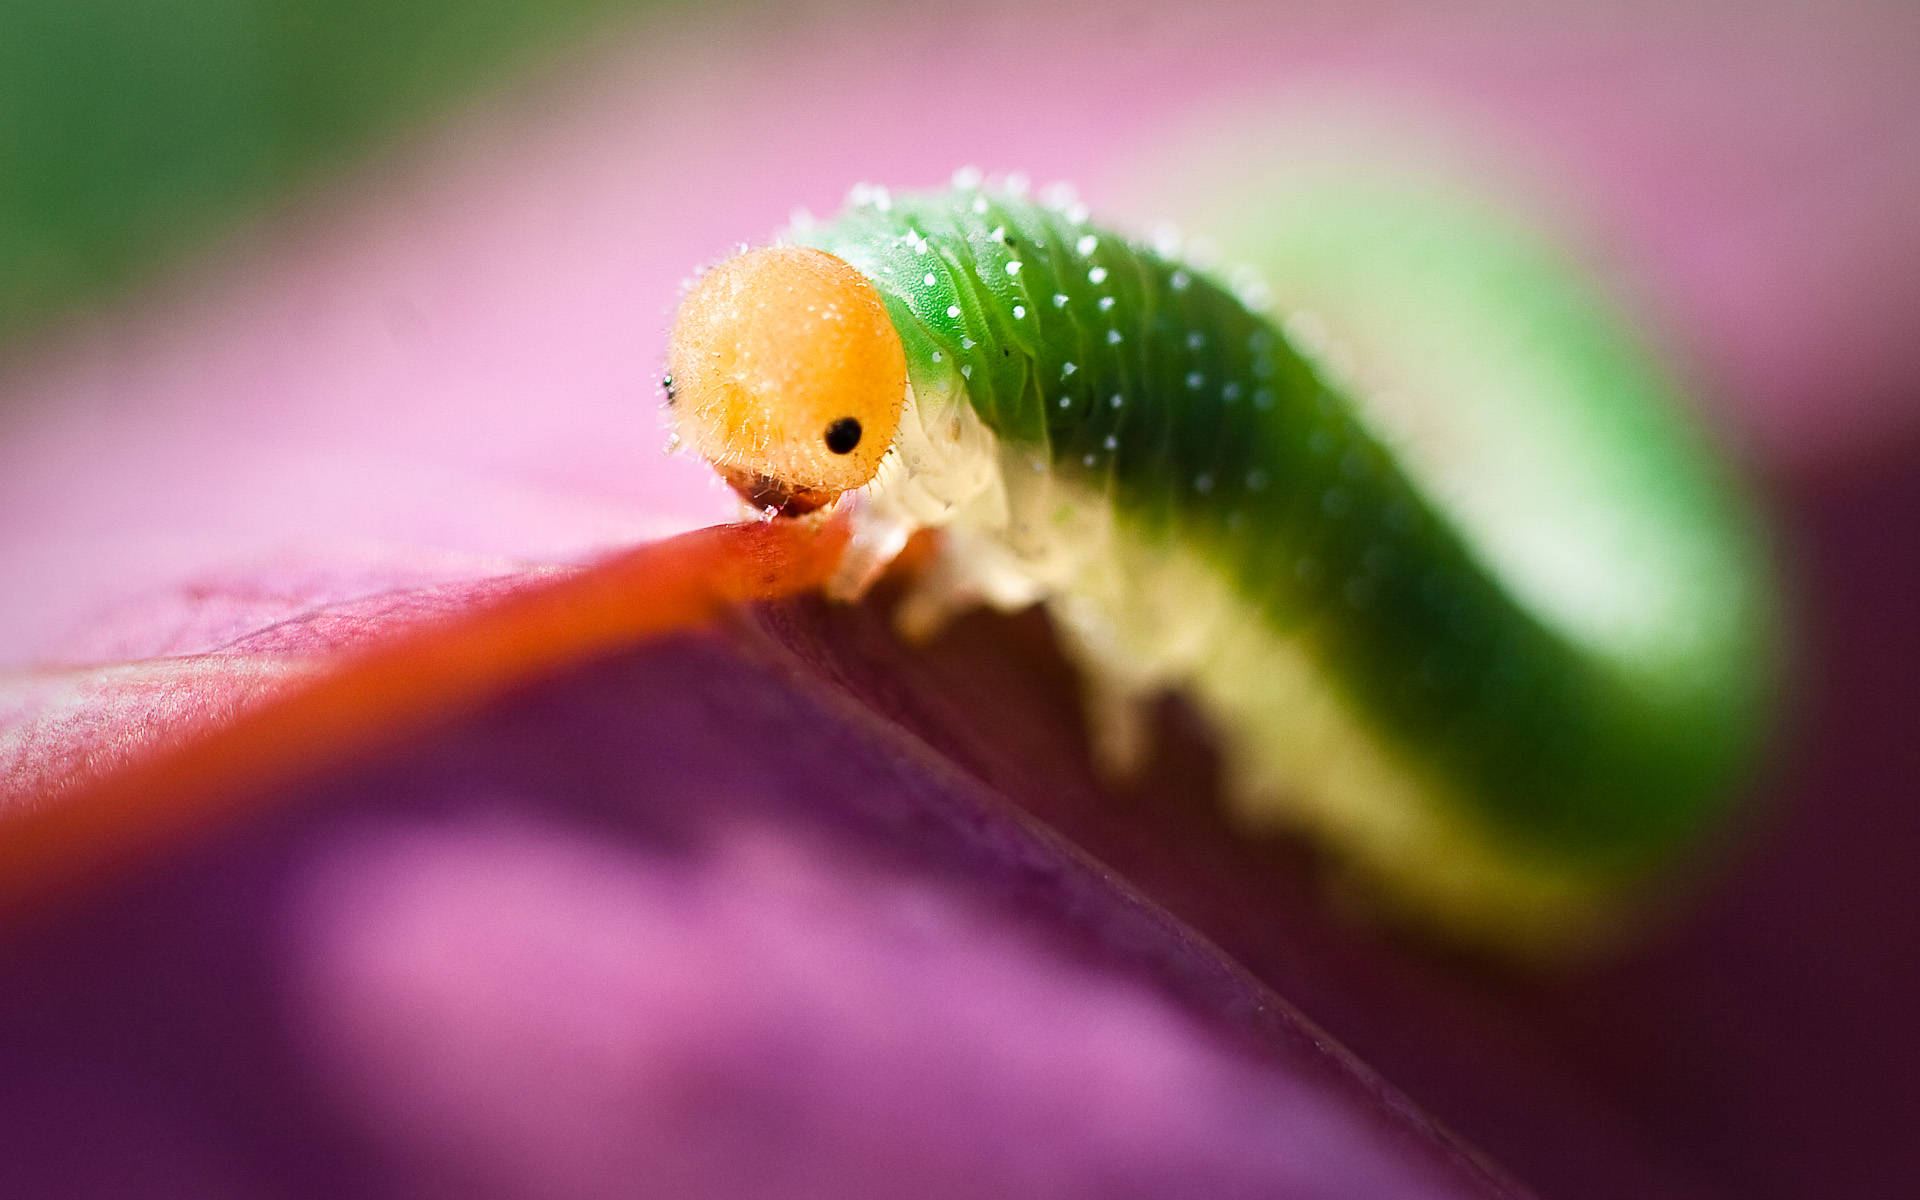 Fotografia Em Hd Da Caterpillar By The Leaf Papel de Parede